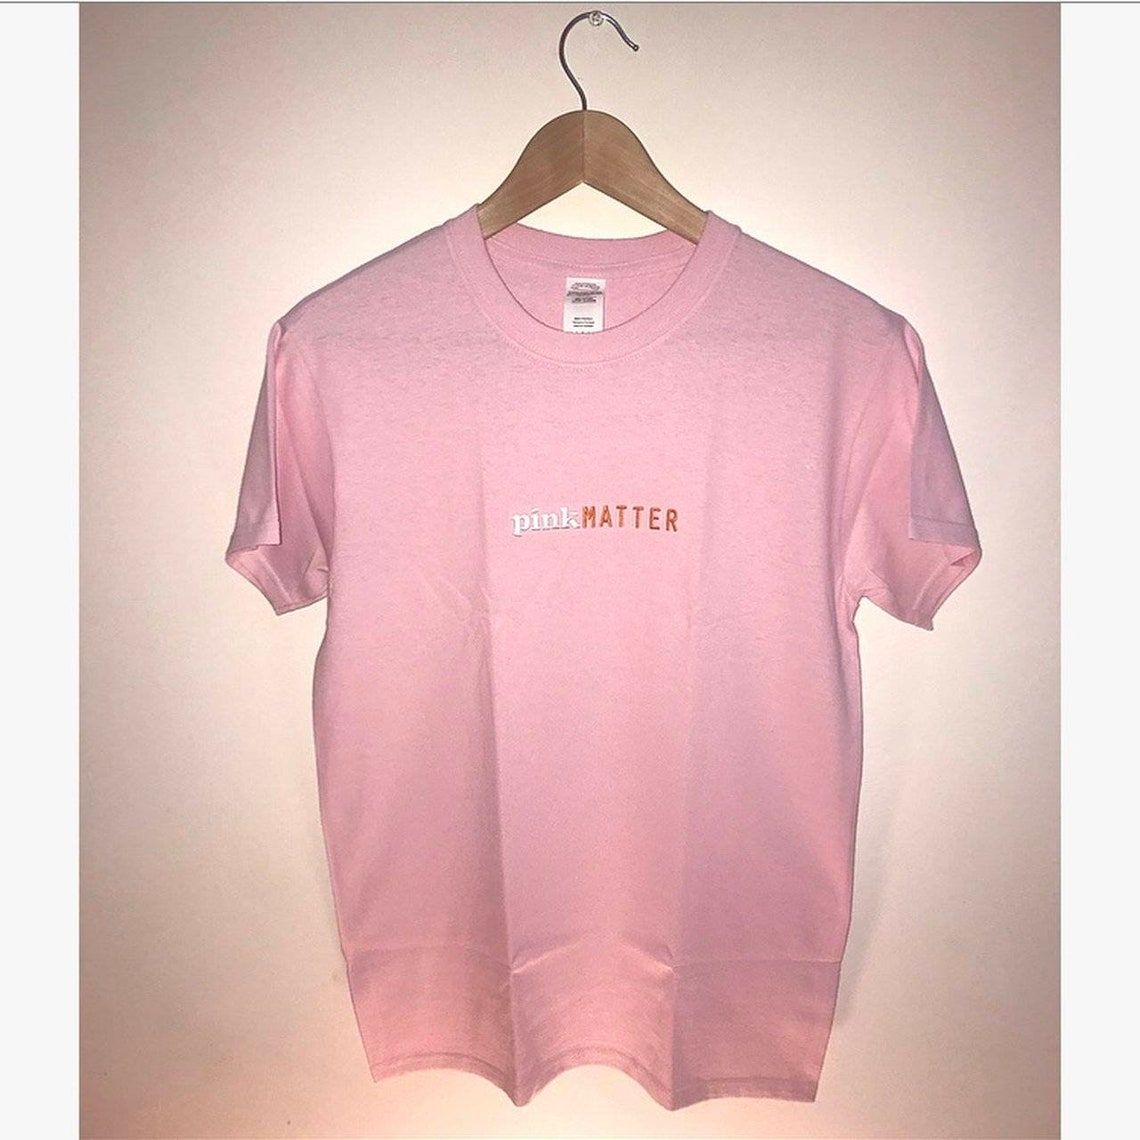 Frank Ocean Pink Matter embroidered t-shirt | Etsy